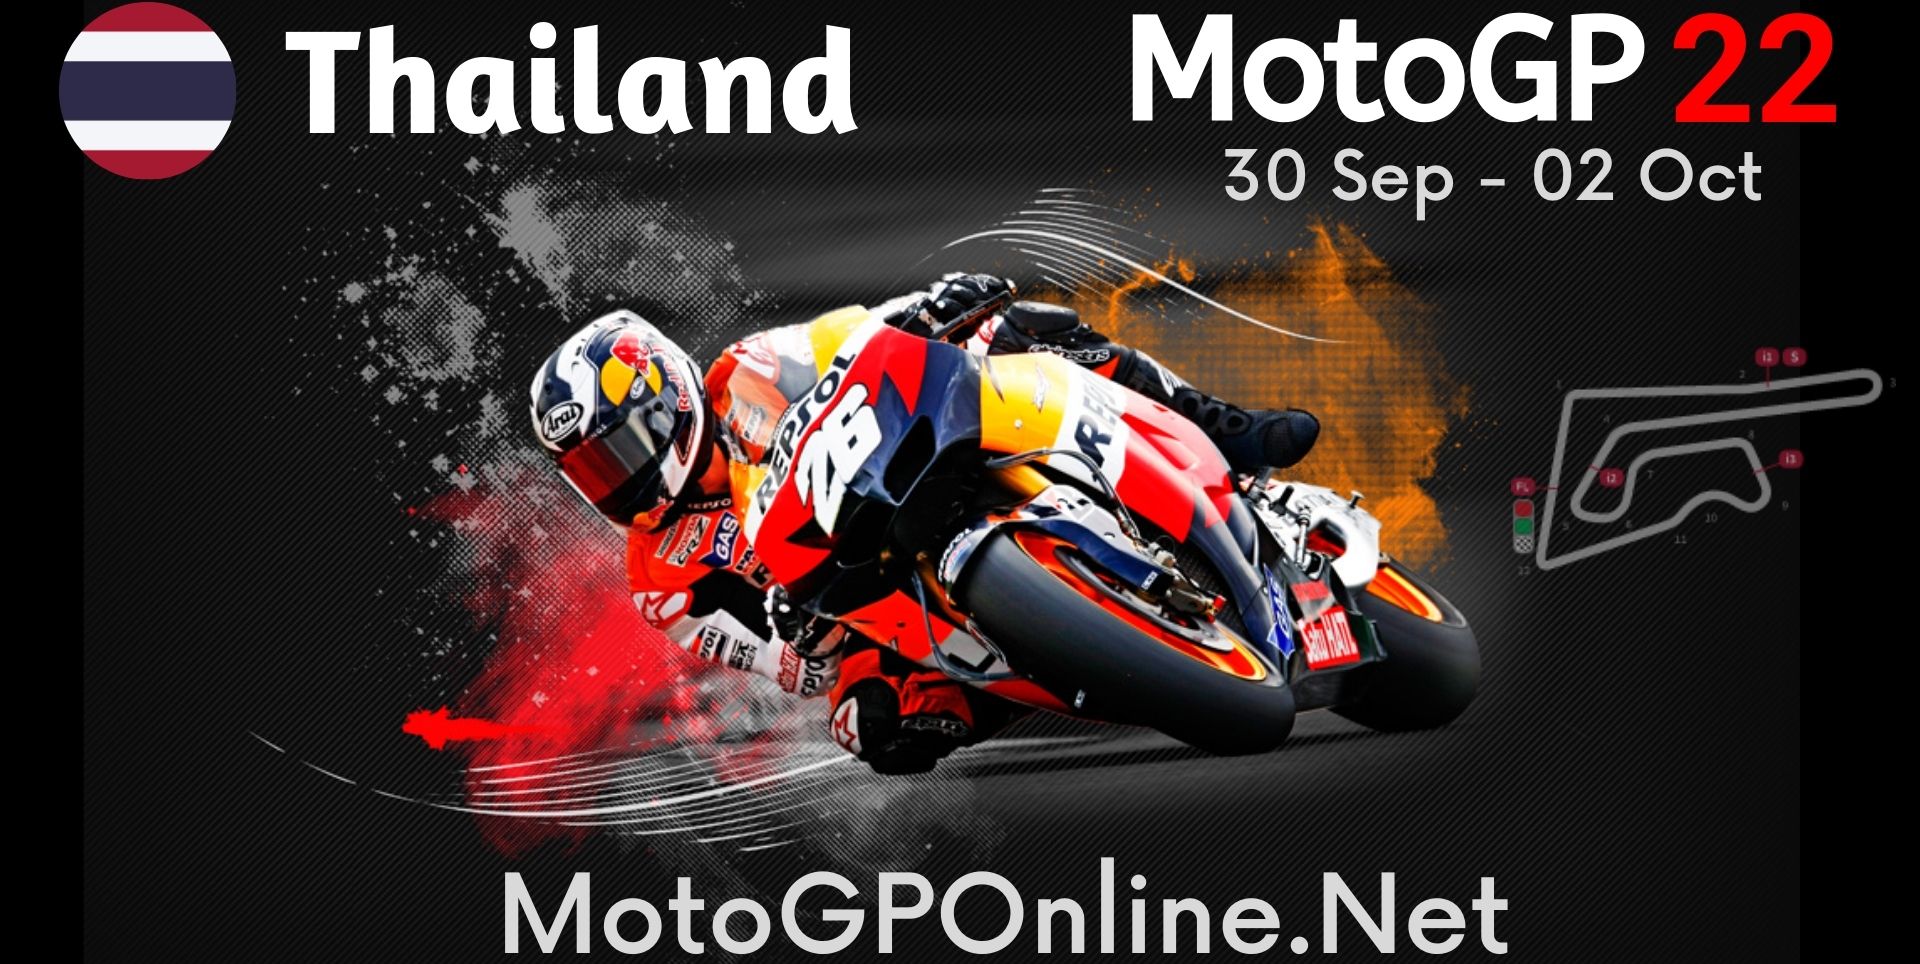 MotoGP Thailand 2018 Race Live Stream